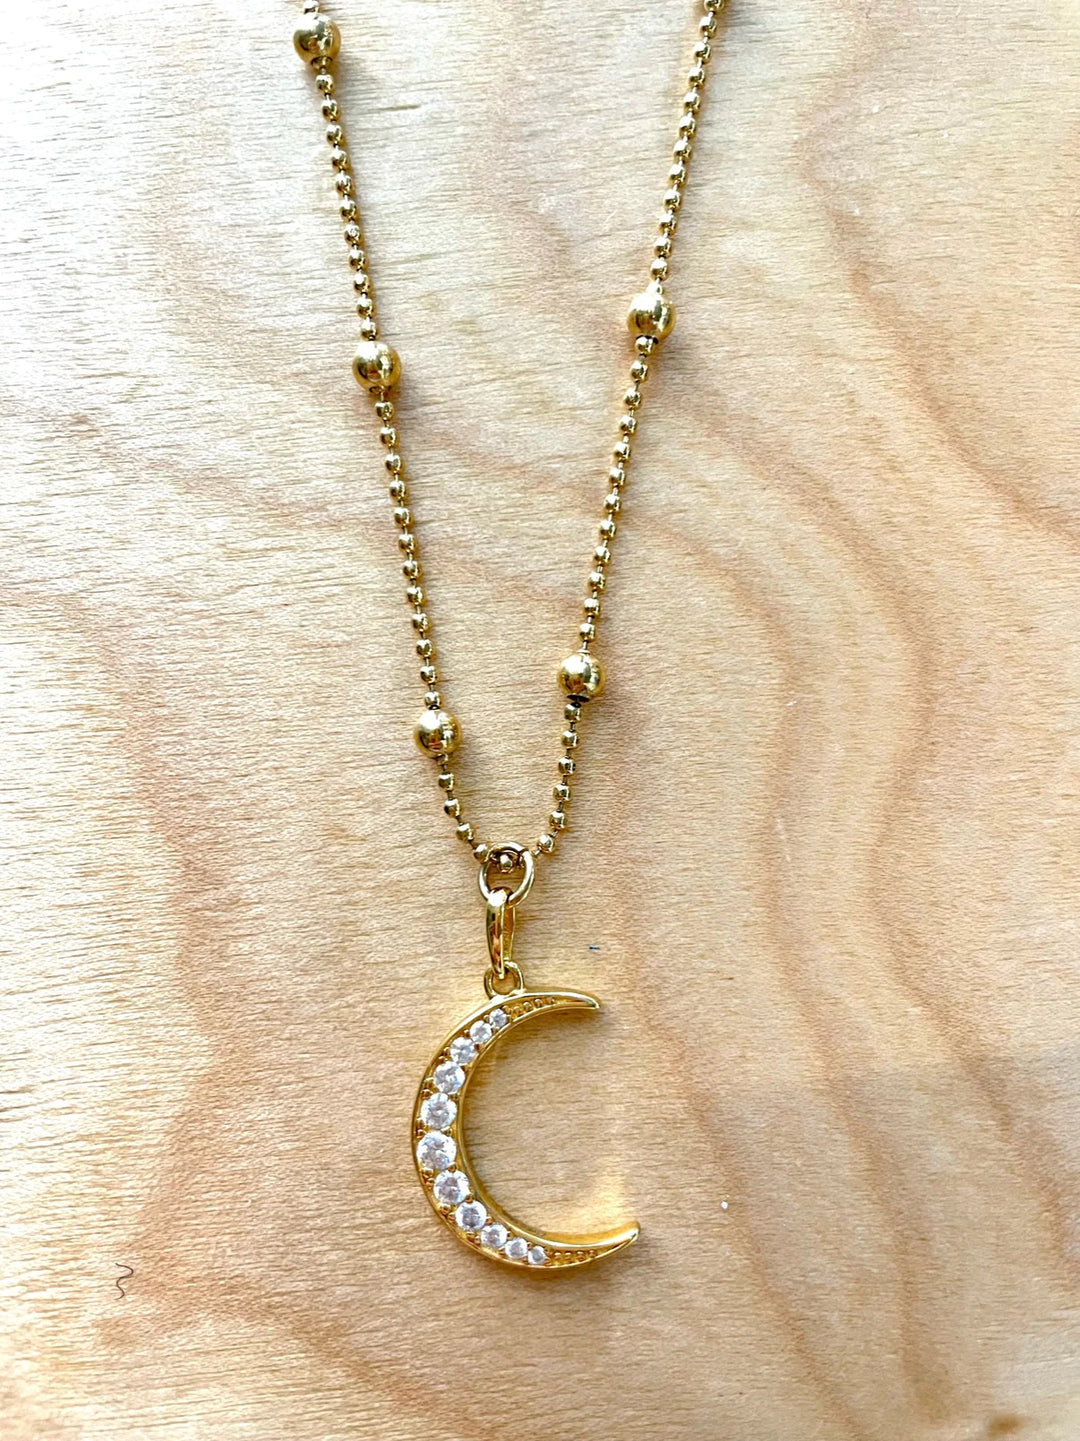 Necklace - Crescent Moon on 24KG Chain - SALE!